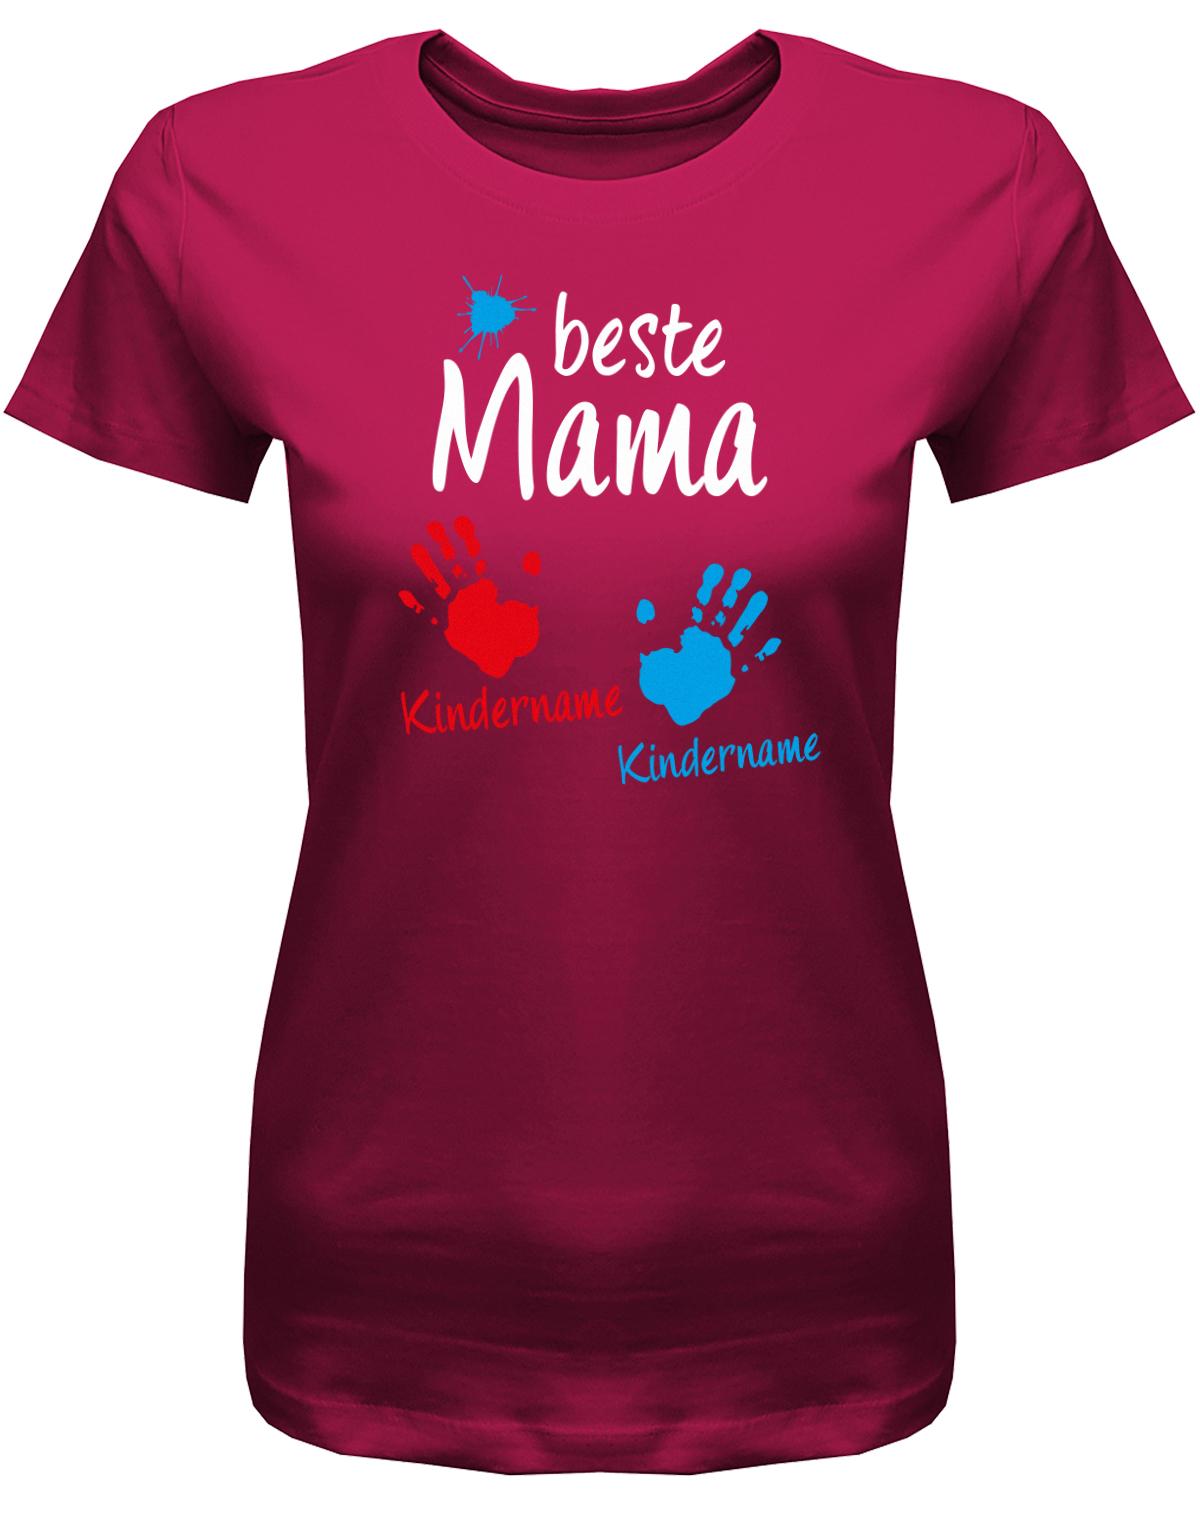 Beste-Mama-2-Kinder-Wusnchnamen-Damen-Shirt-Sorbet